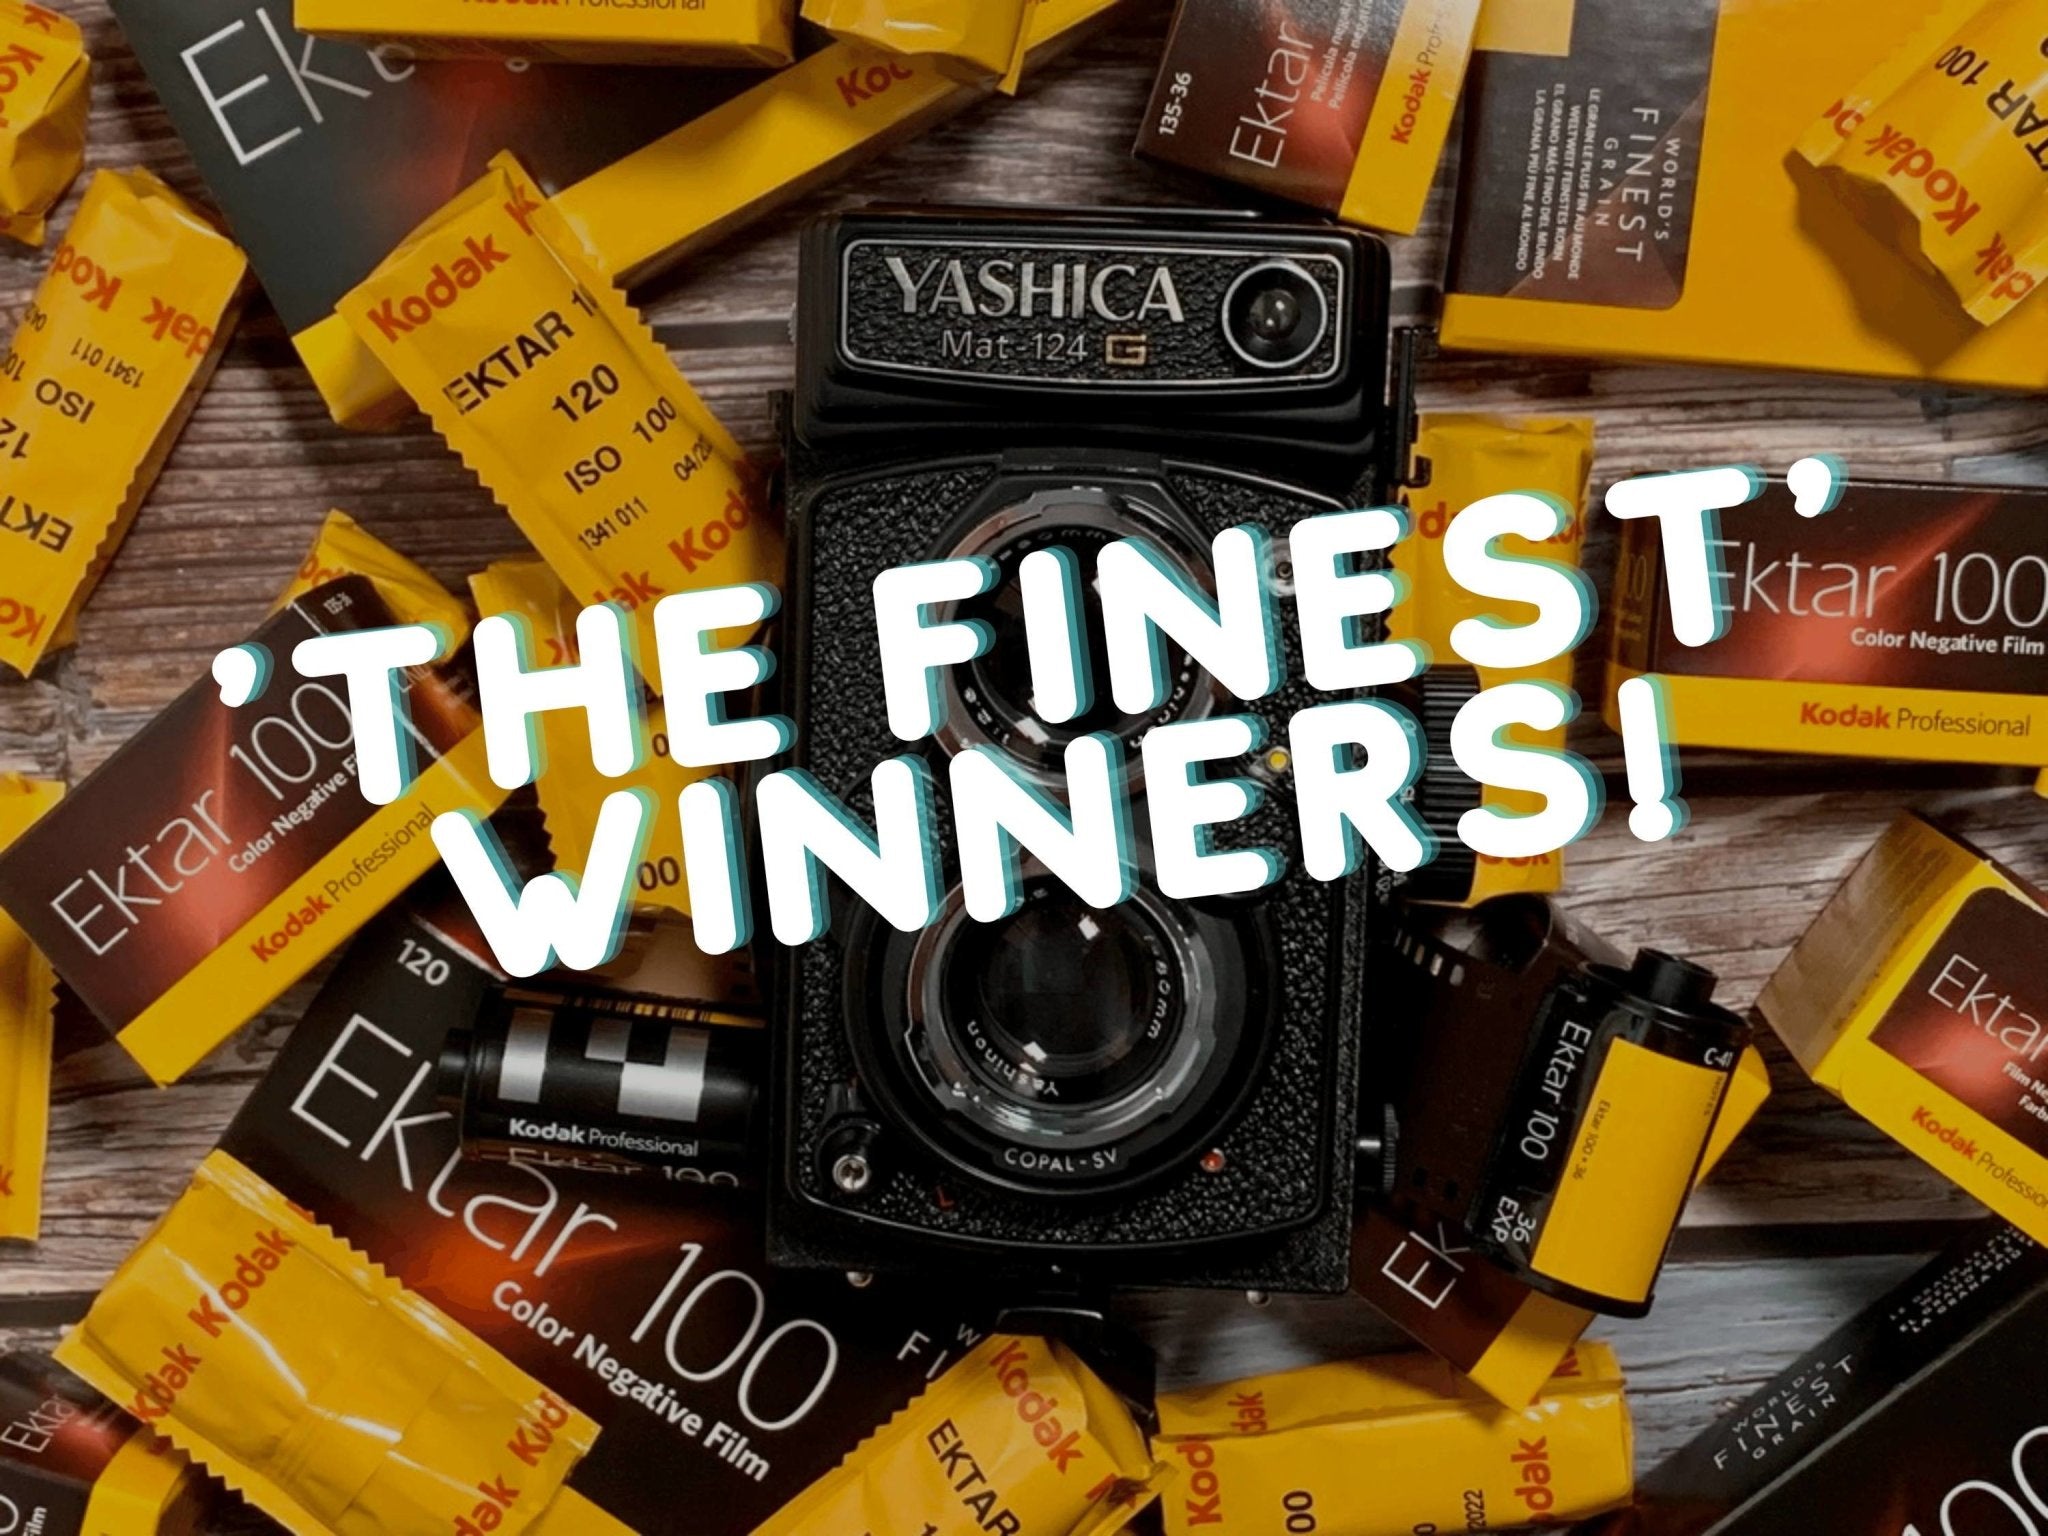 Kodak Ektar 'The Finest' - Winners! - Analogue Wonderland